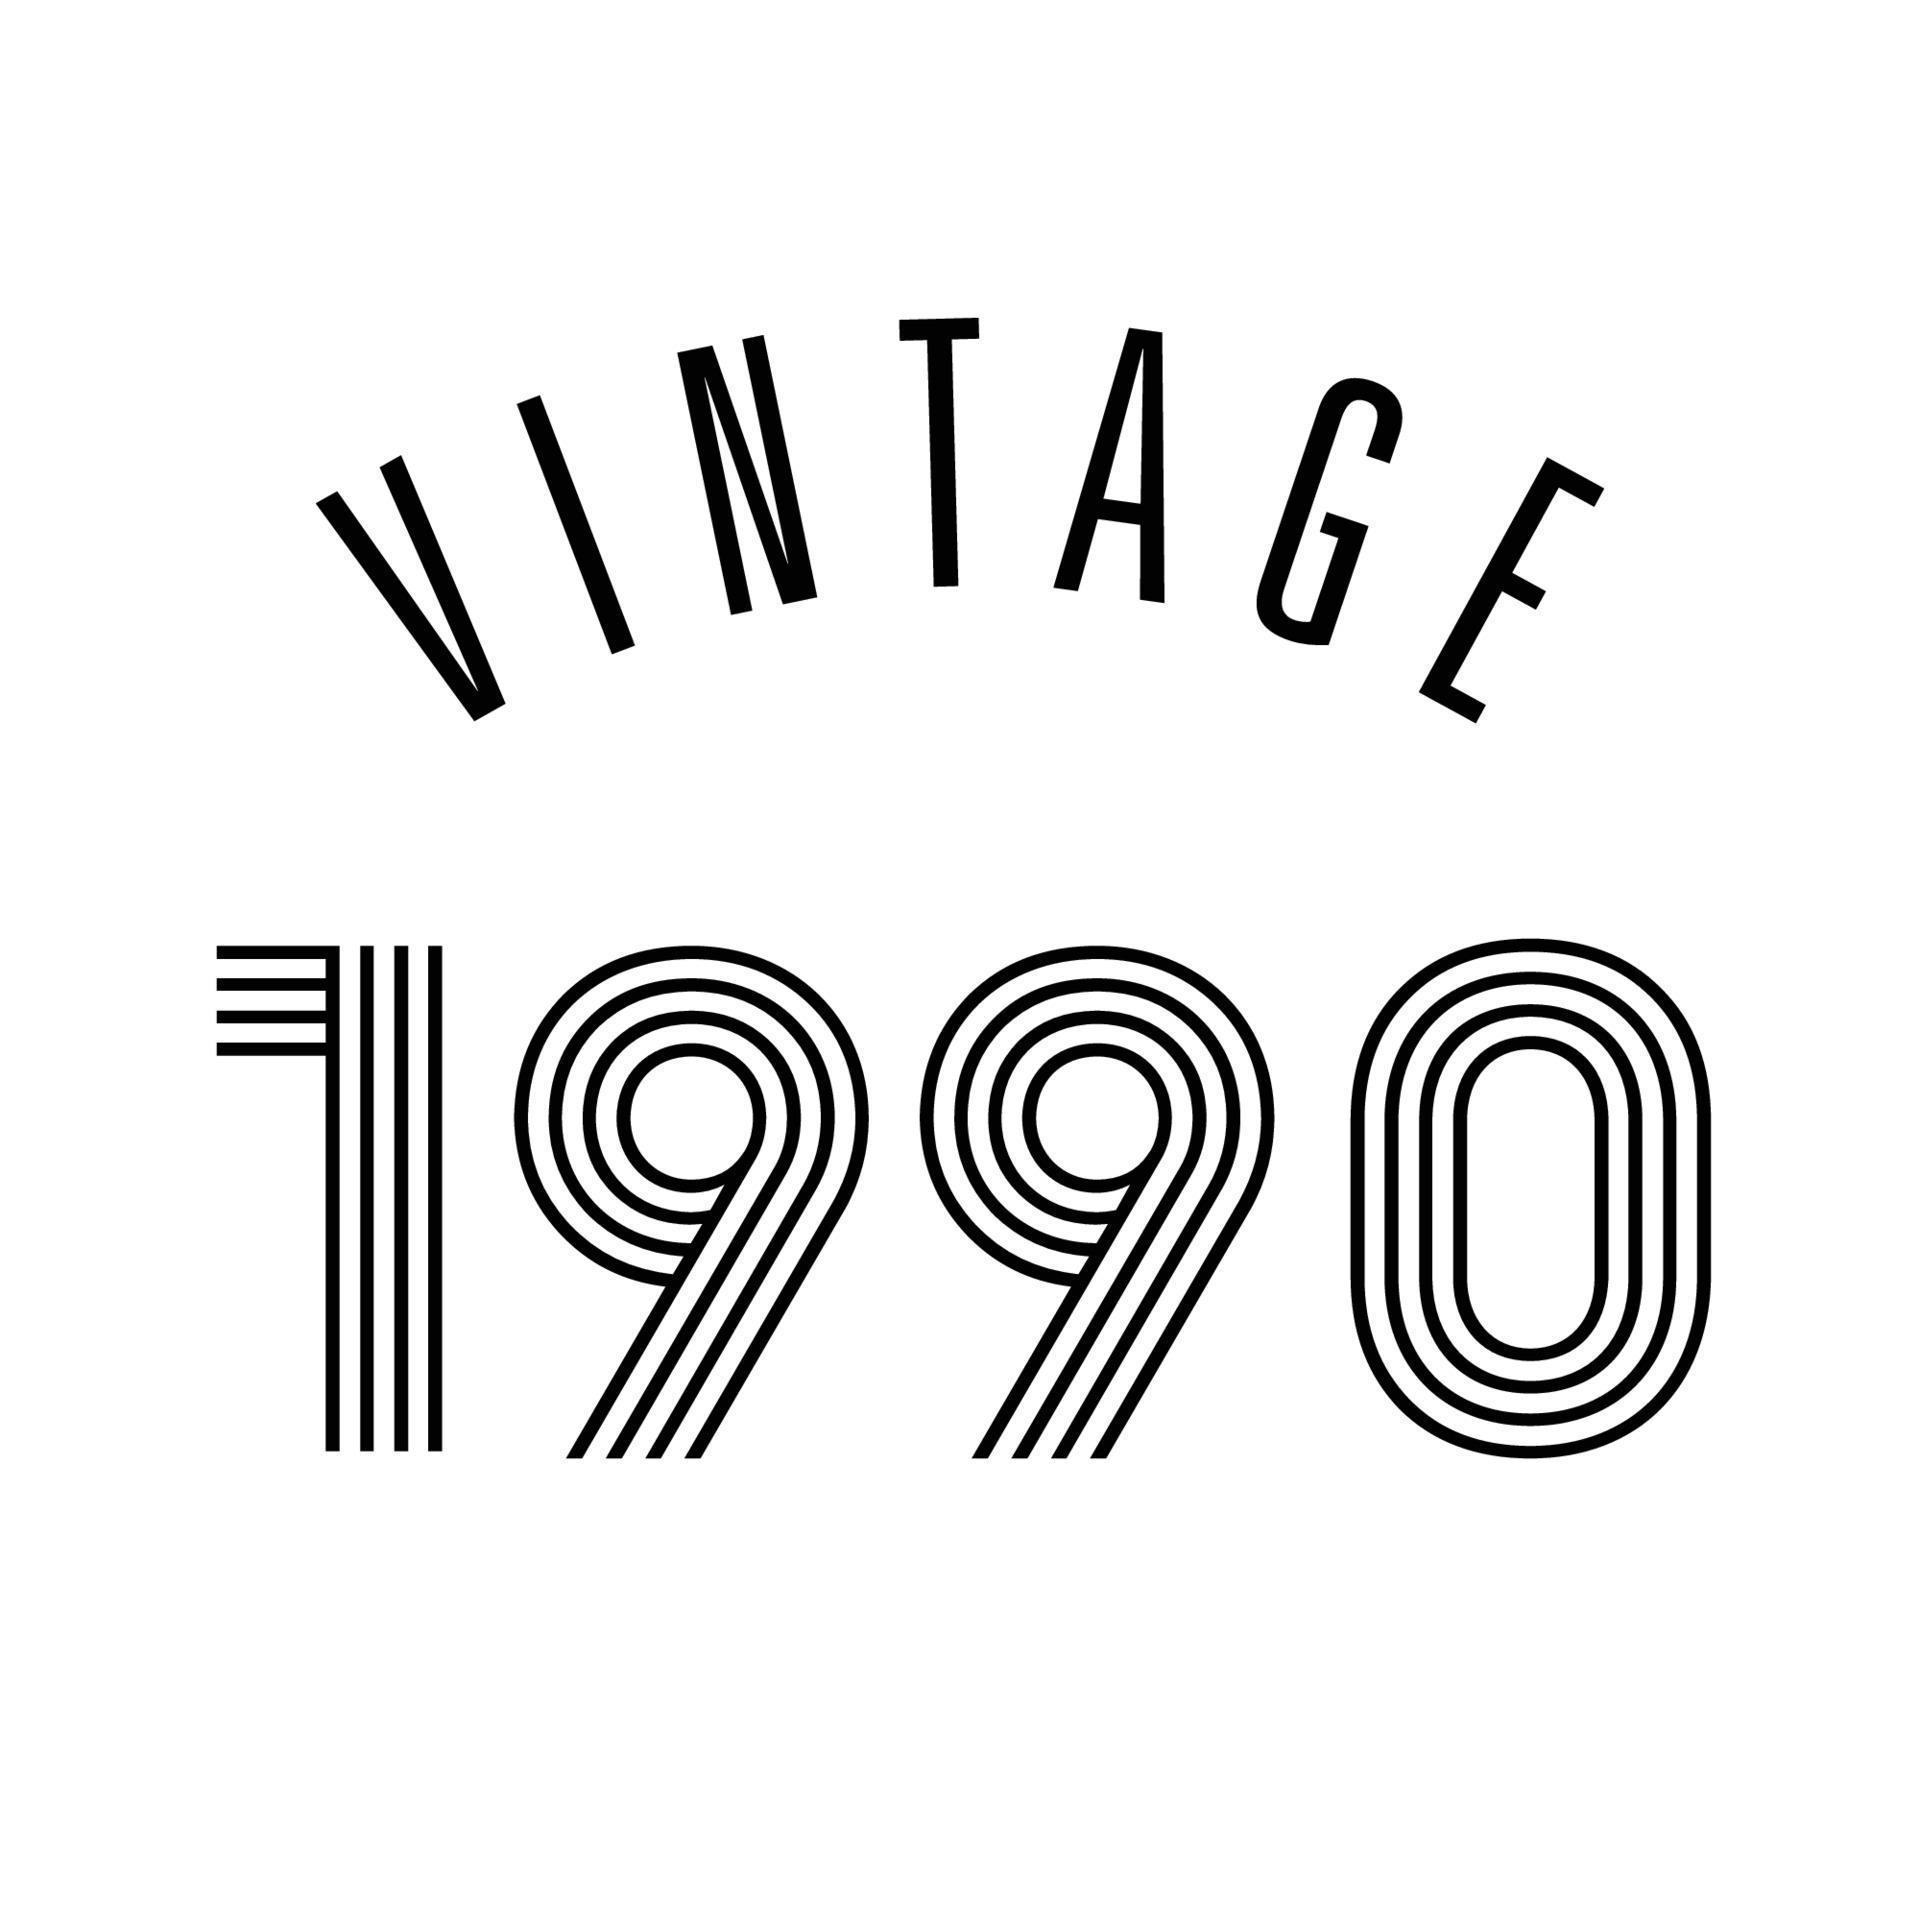 1990 vintage retro t shirt design vector 6954795 Vector Art at Vecteezy